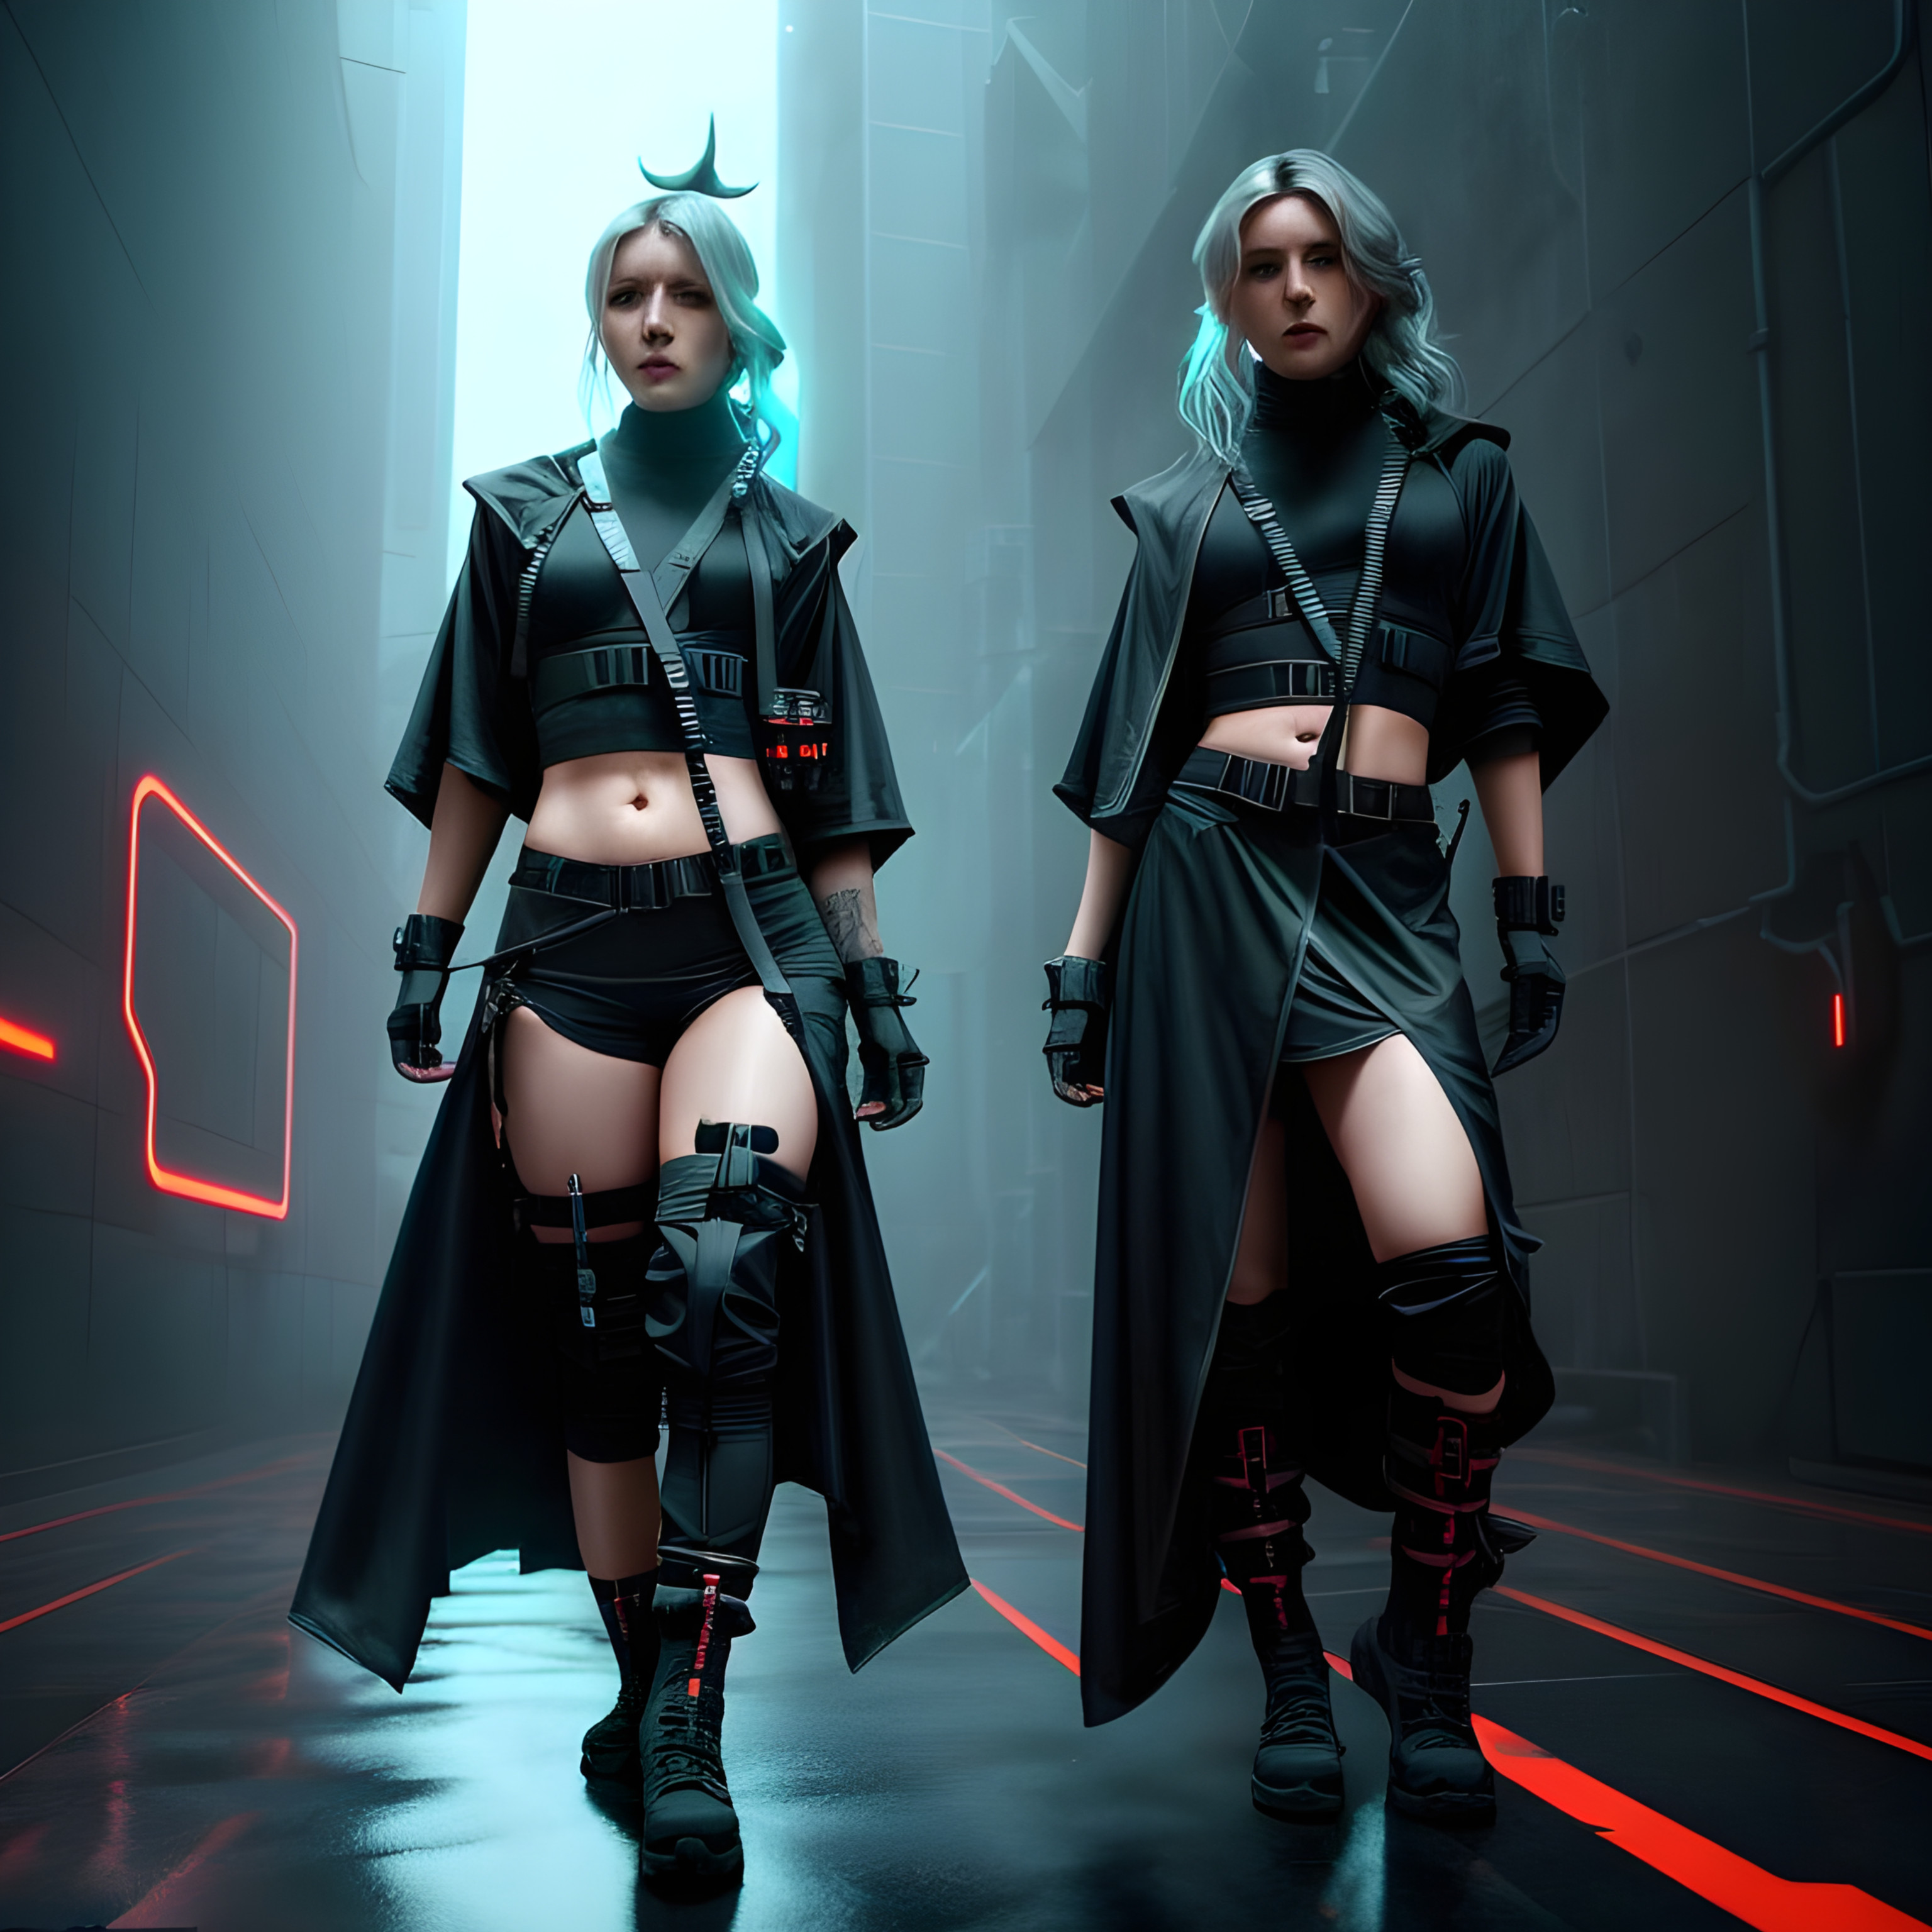 Cosplay 037 - Cyberpunk Urban Girl